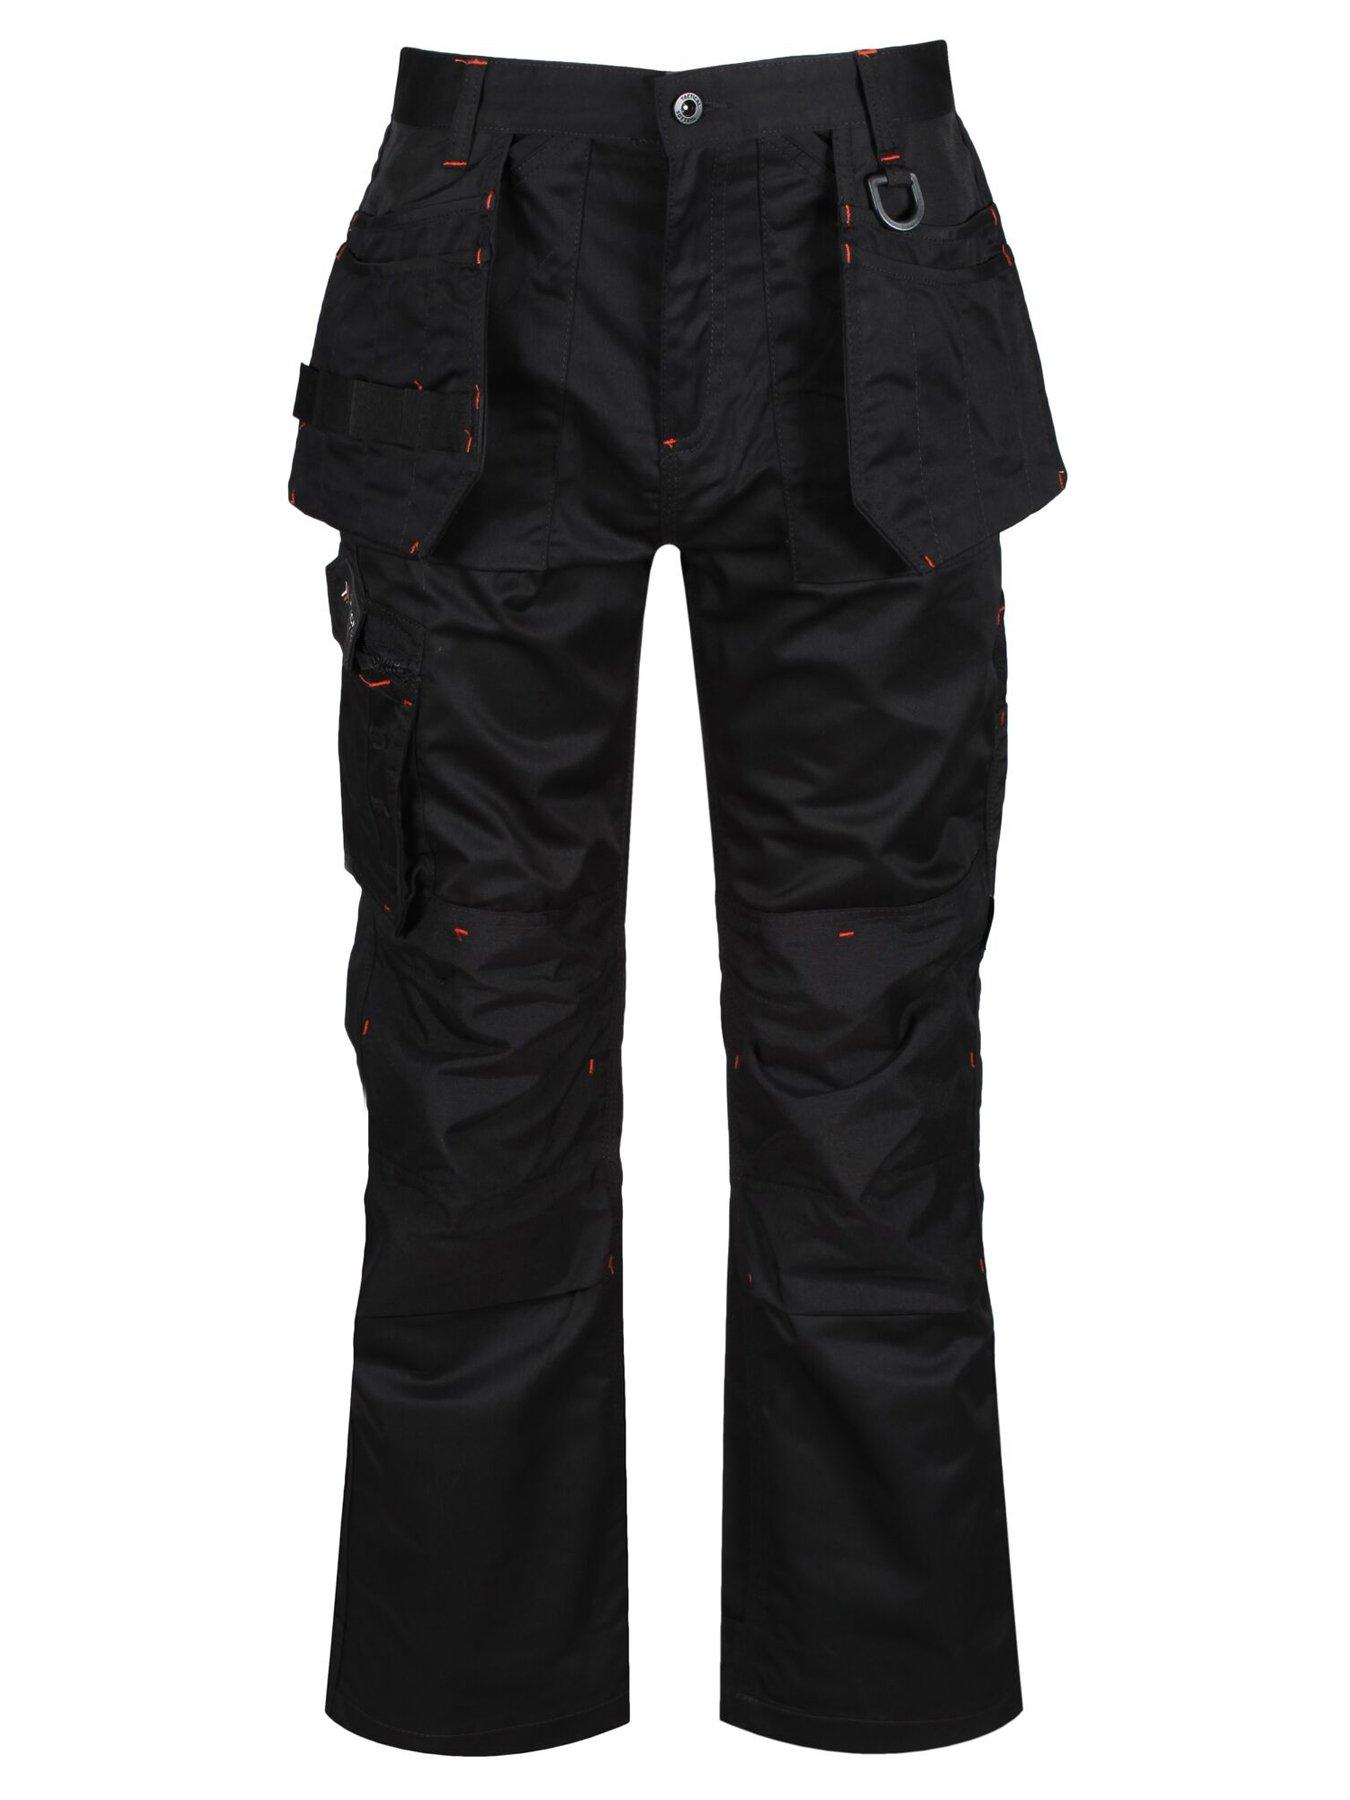 Sportswear Professional Workwear Incursion Trousers - Black